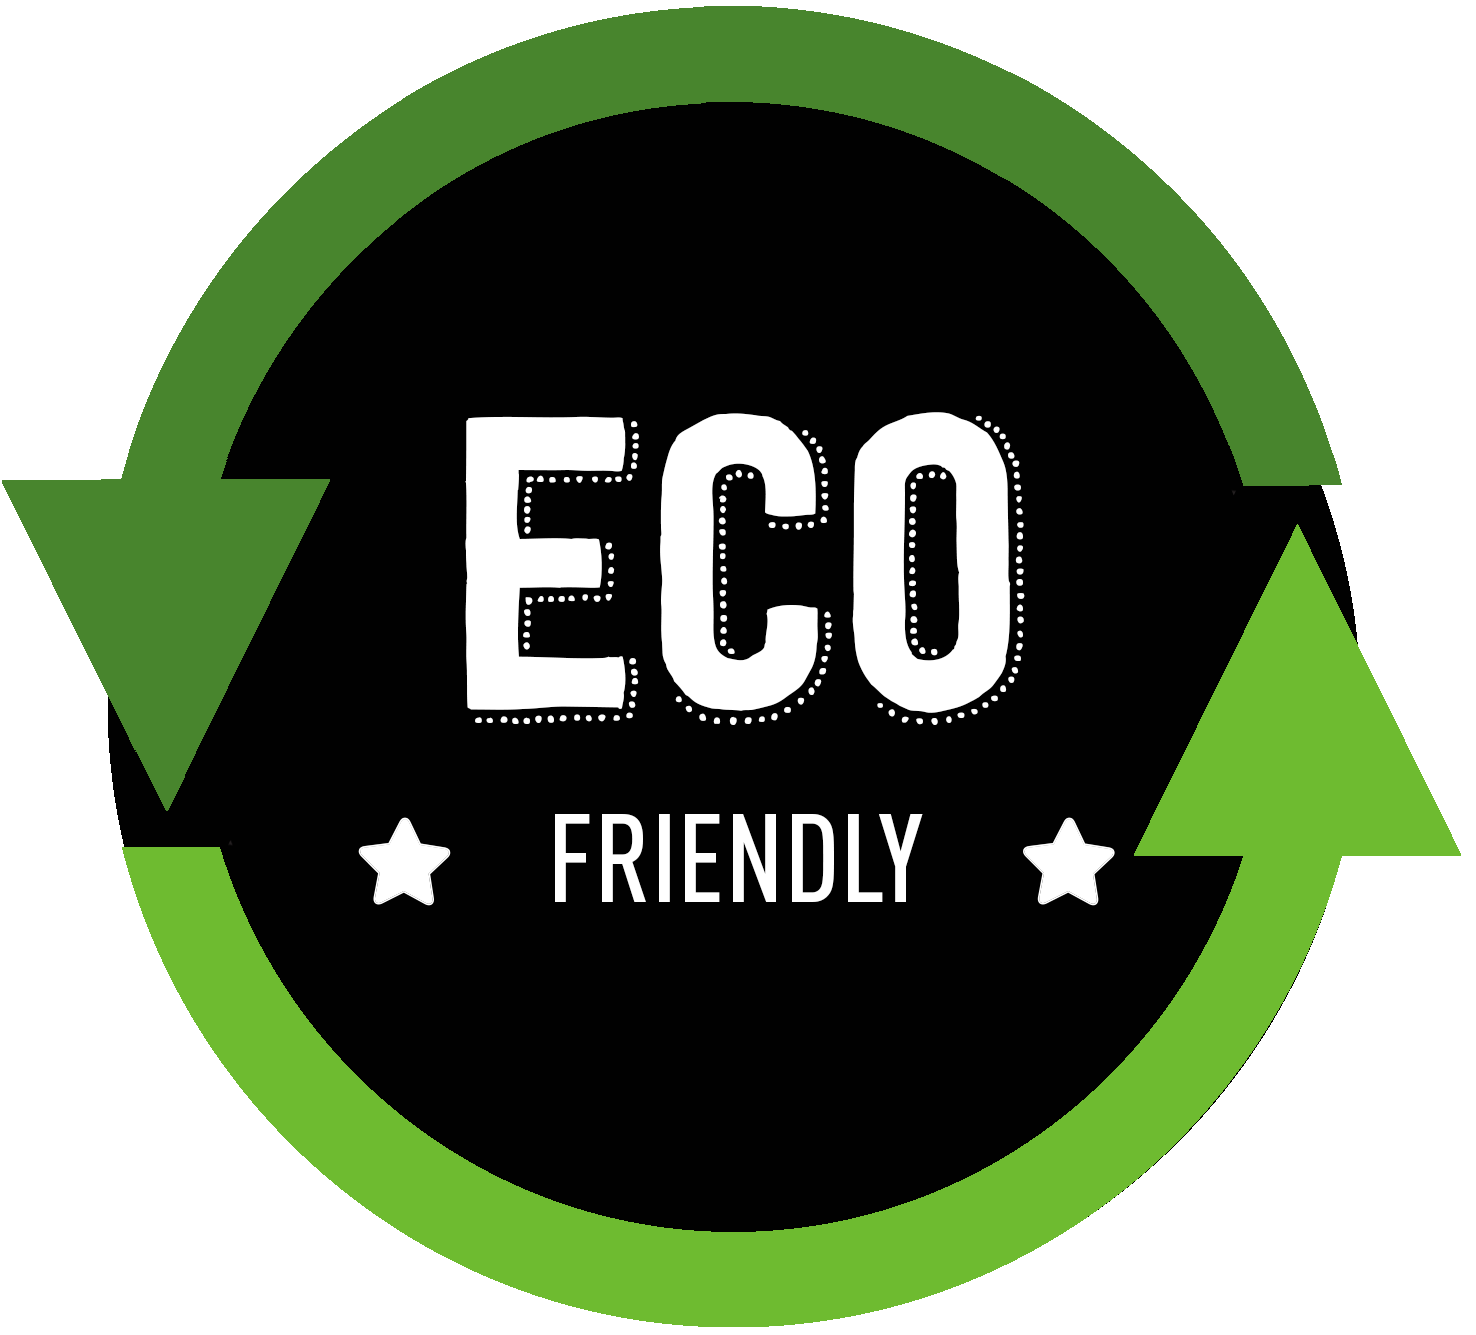 Eco Friendly Transparent PNG